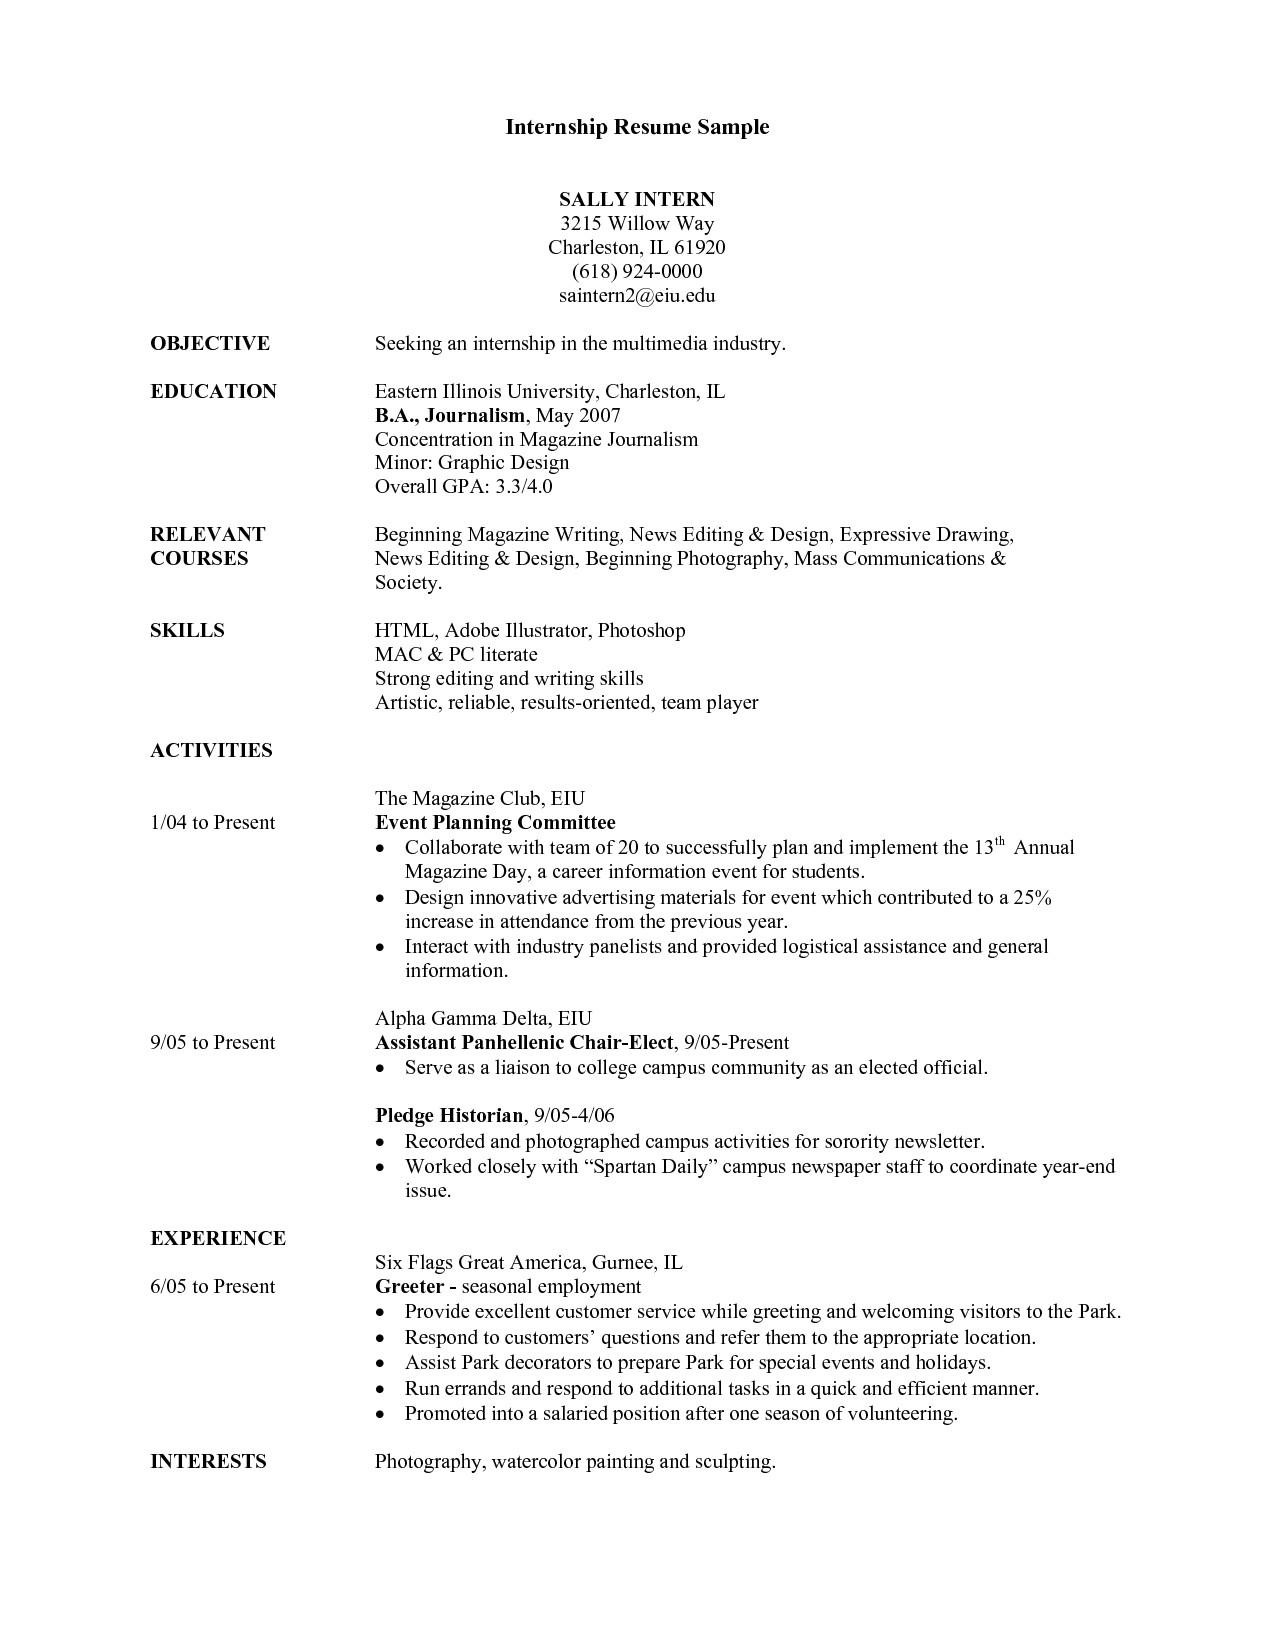 college student resume for internship 4824